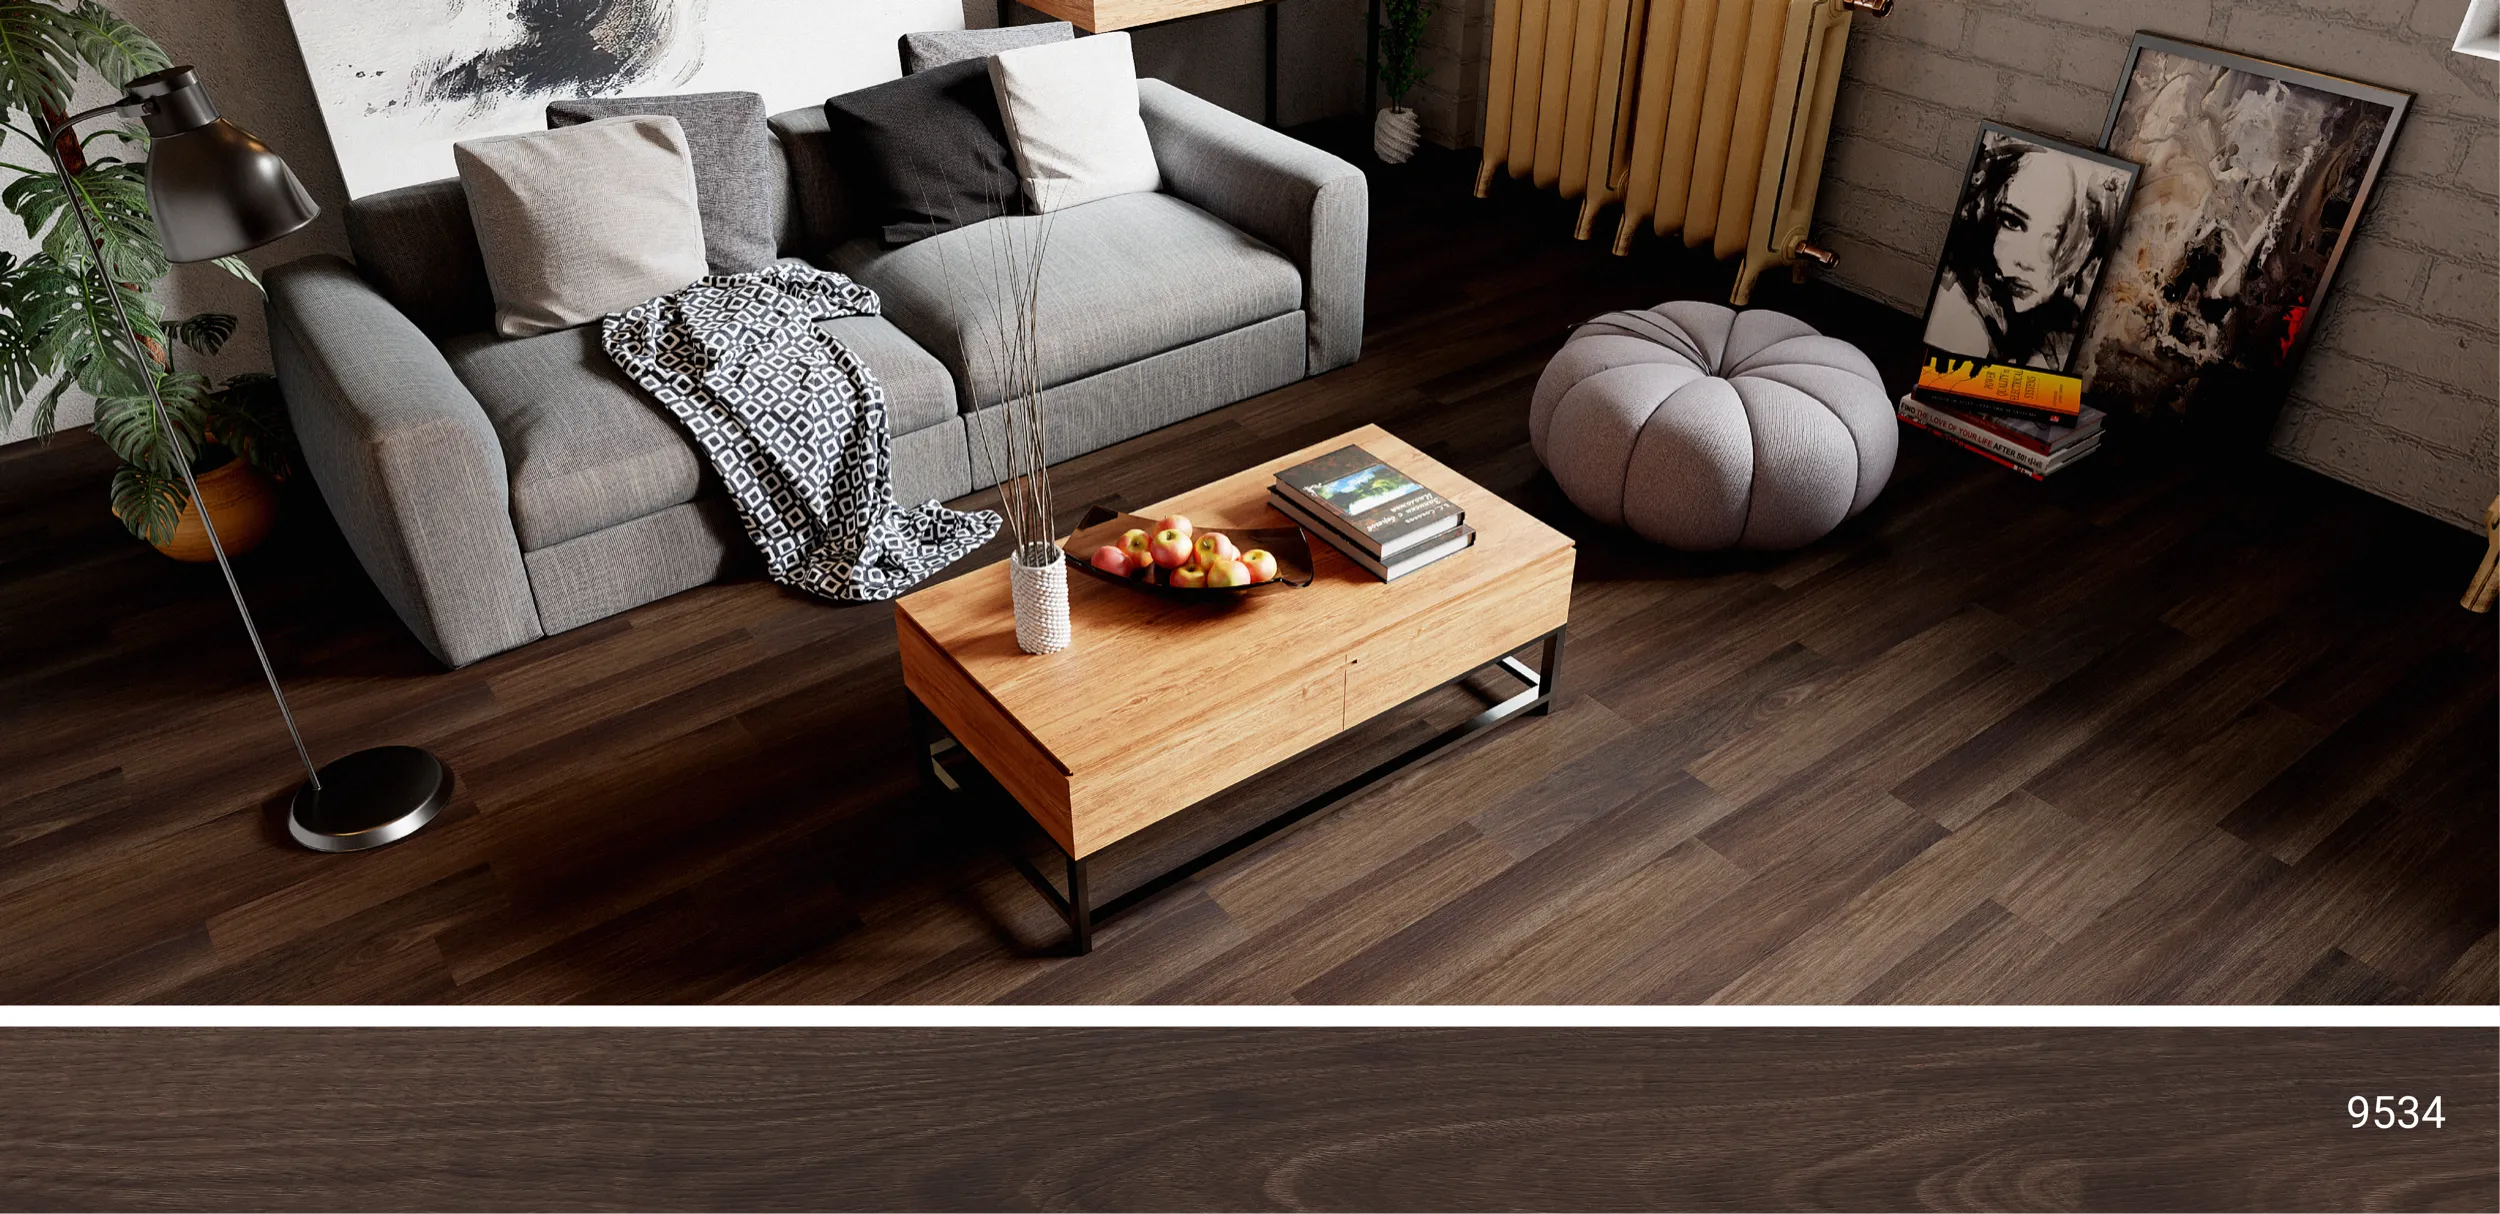 Living room with luxury vinyl flooring installed. SKU 9534 Fairbanks by Urban Surfaces.